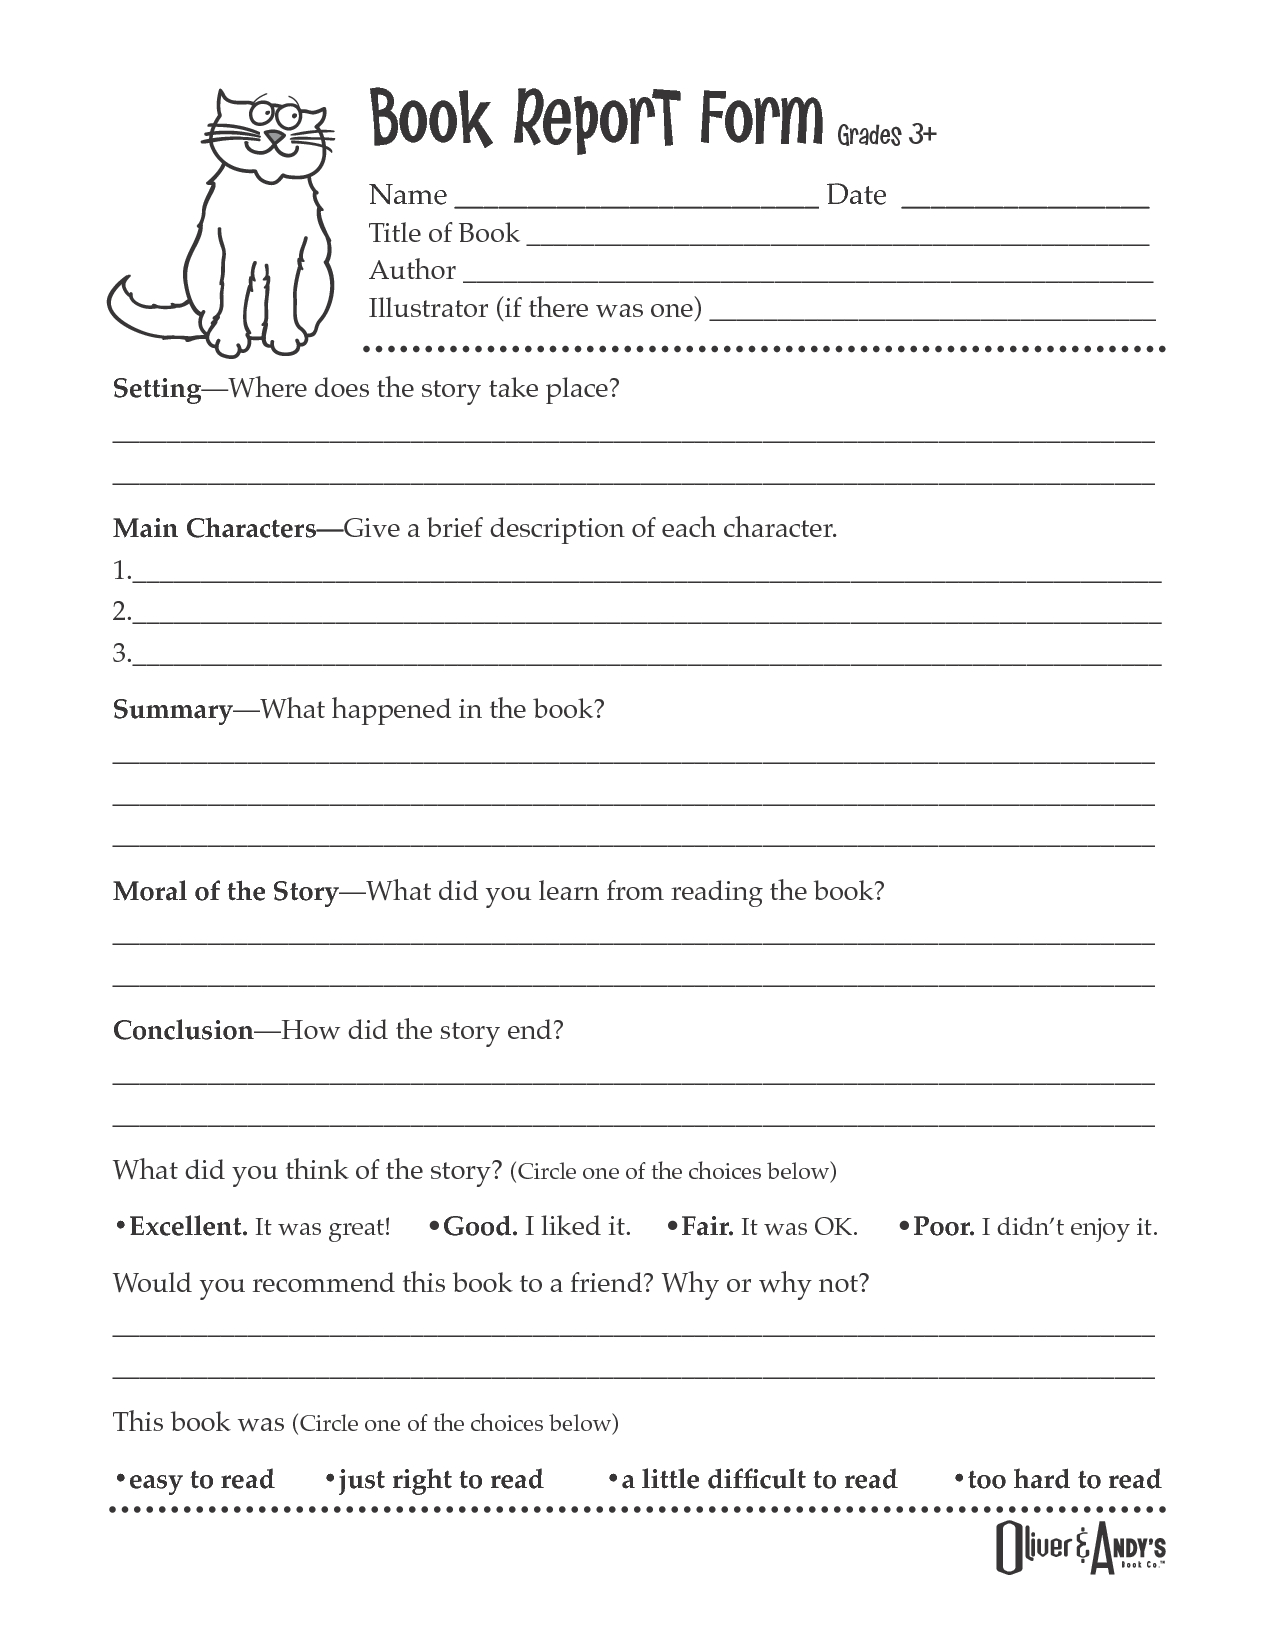 Second Grade Book Report Template | Book Report Form Grades 3+ - Free Printable Book Report Forms For Elementary Students